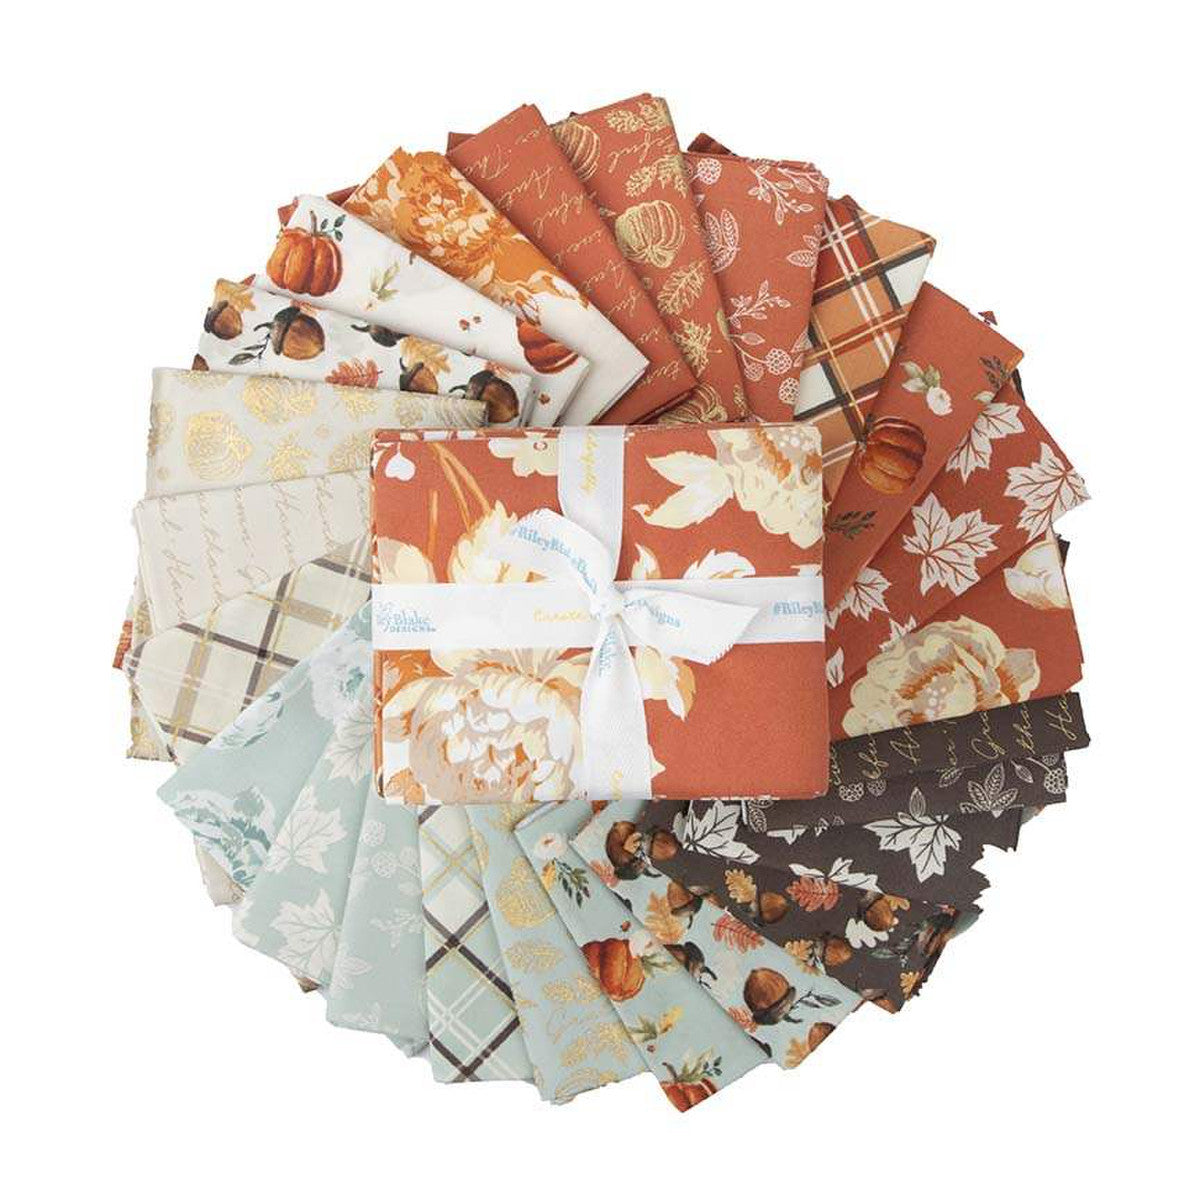 Shades of Autumn Fat Quarter Bundle -Riley Blake Designs- 24 Prints